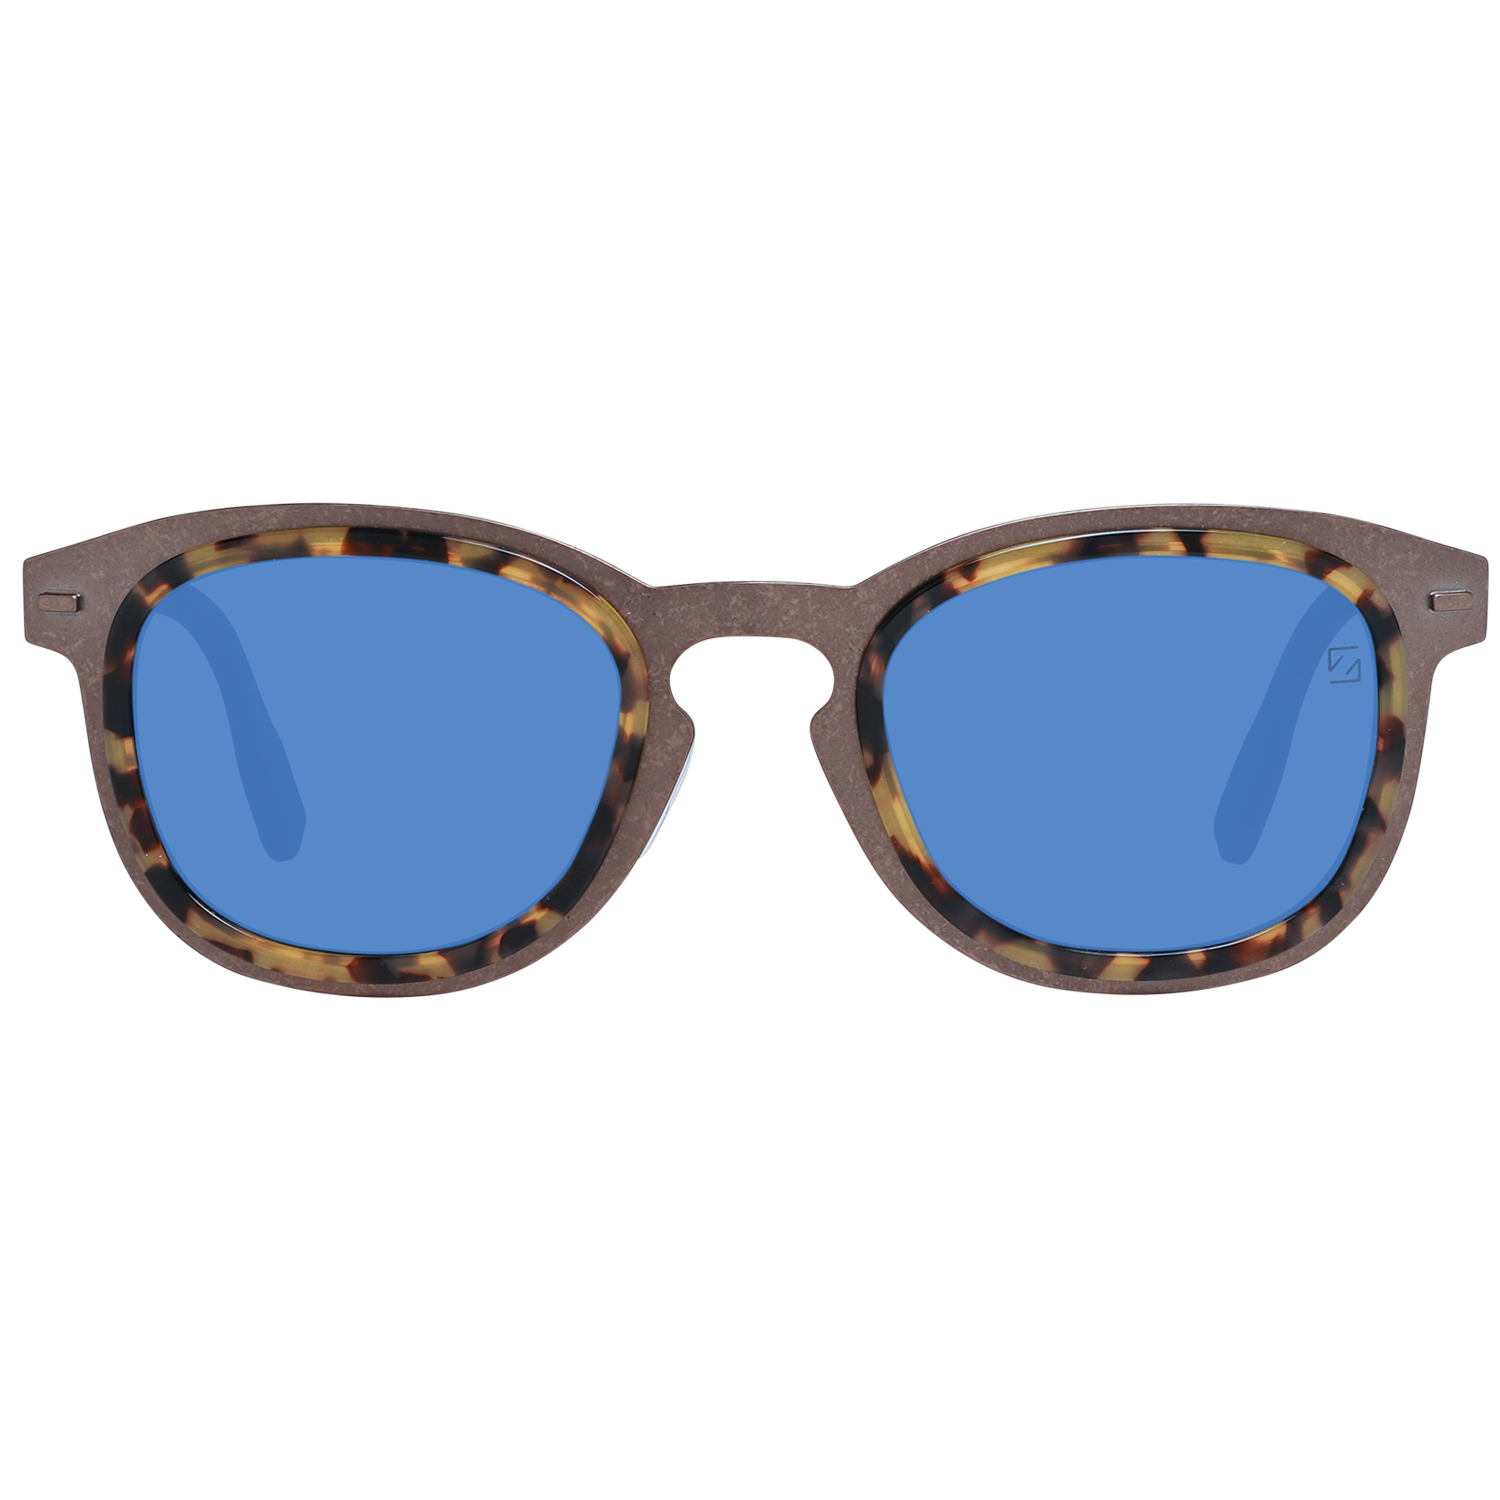 Zegna Couture Sunglasses Zegna Couture Sunglasses ZC0007 50 38V Titanium Eyeglasses Eyewear UK USA Australia 